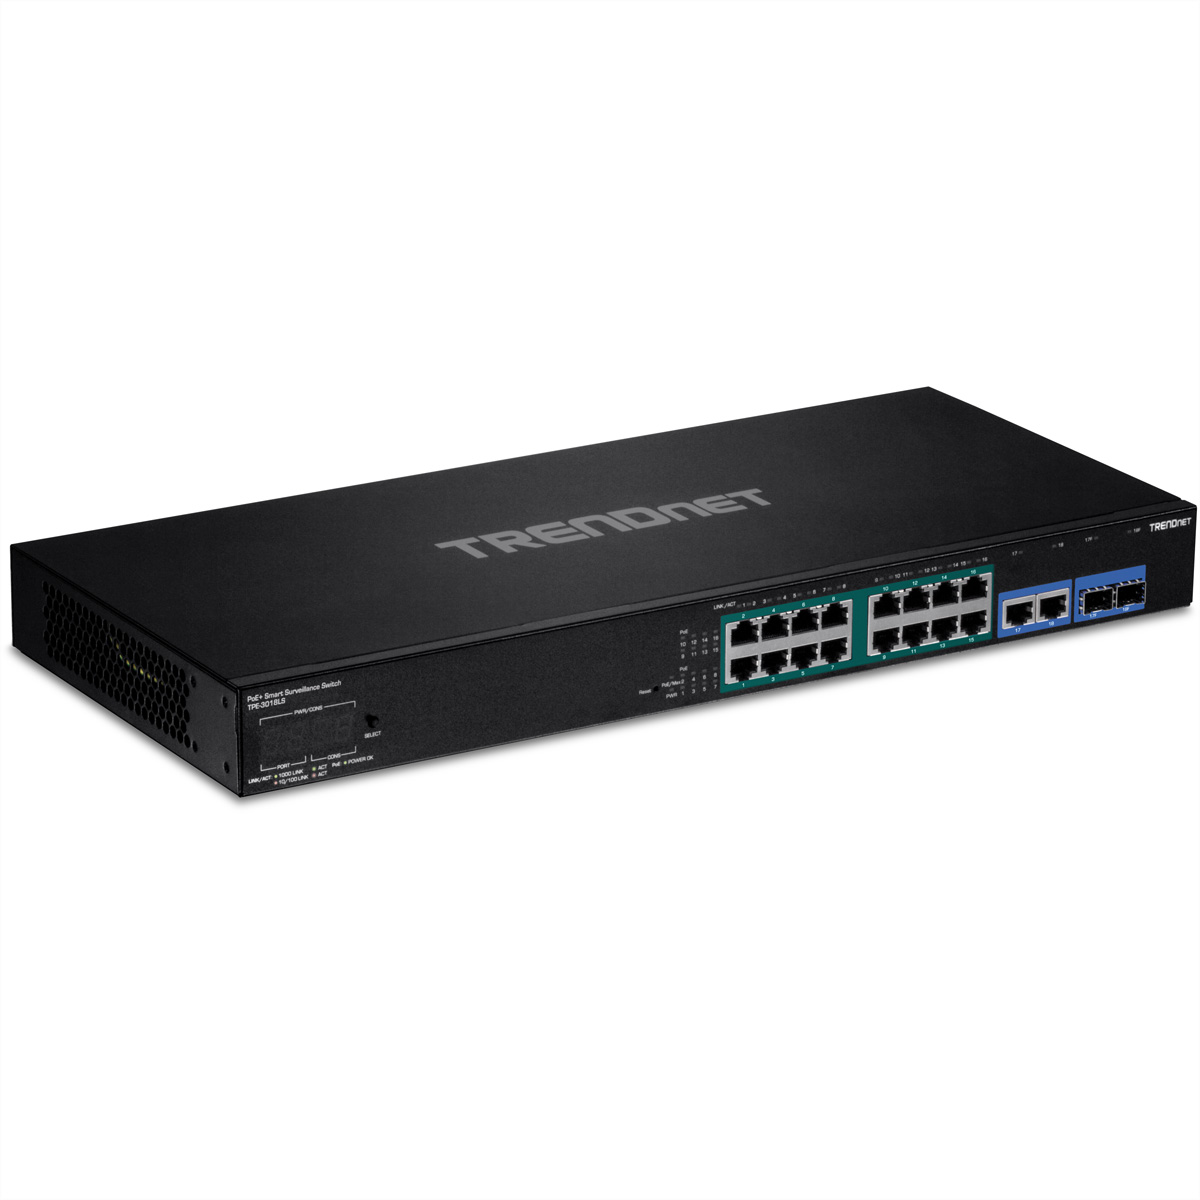 TRENDnet TPE-3018LS 18-Port Gigabit PoE+ Smart Surveillance Switch